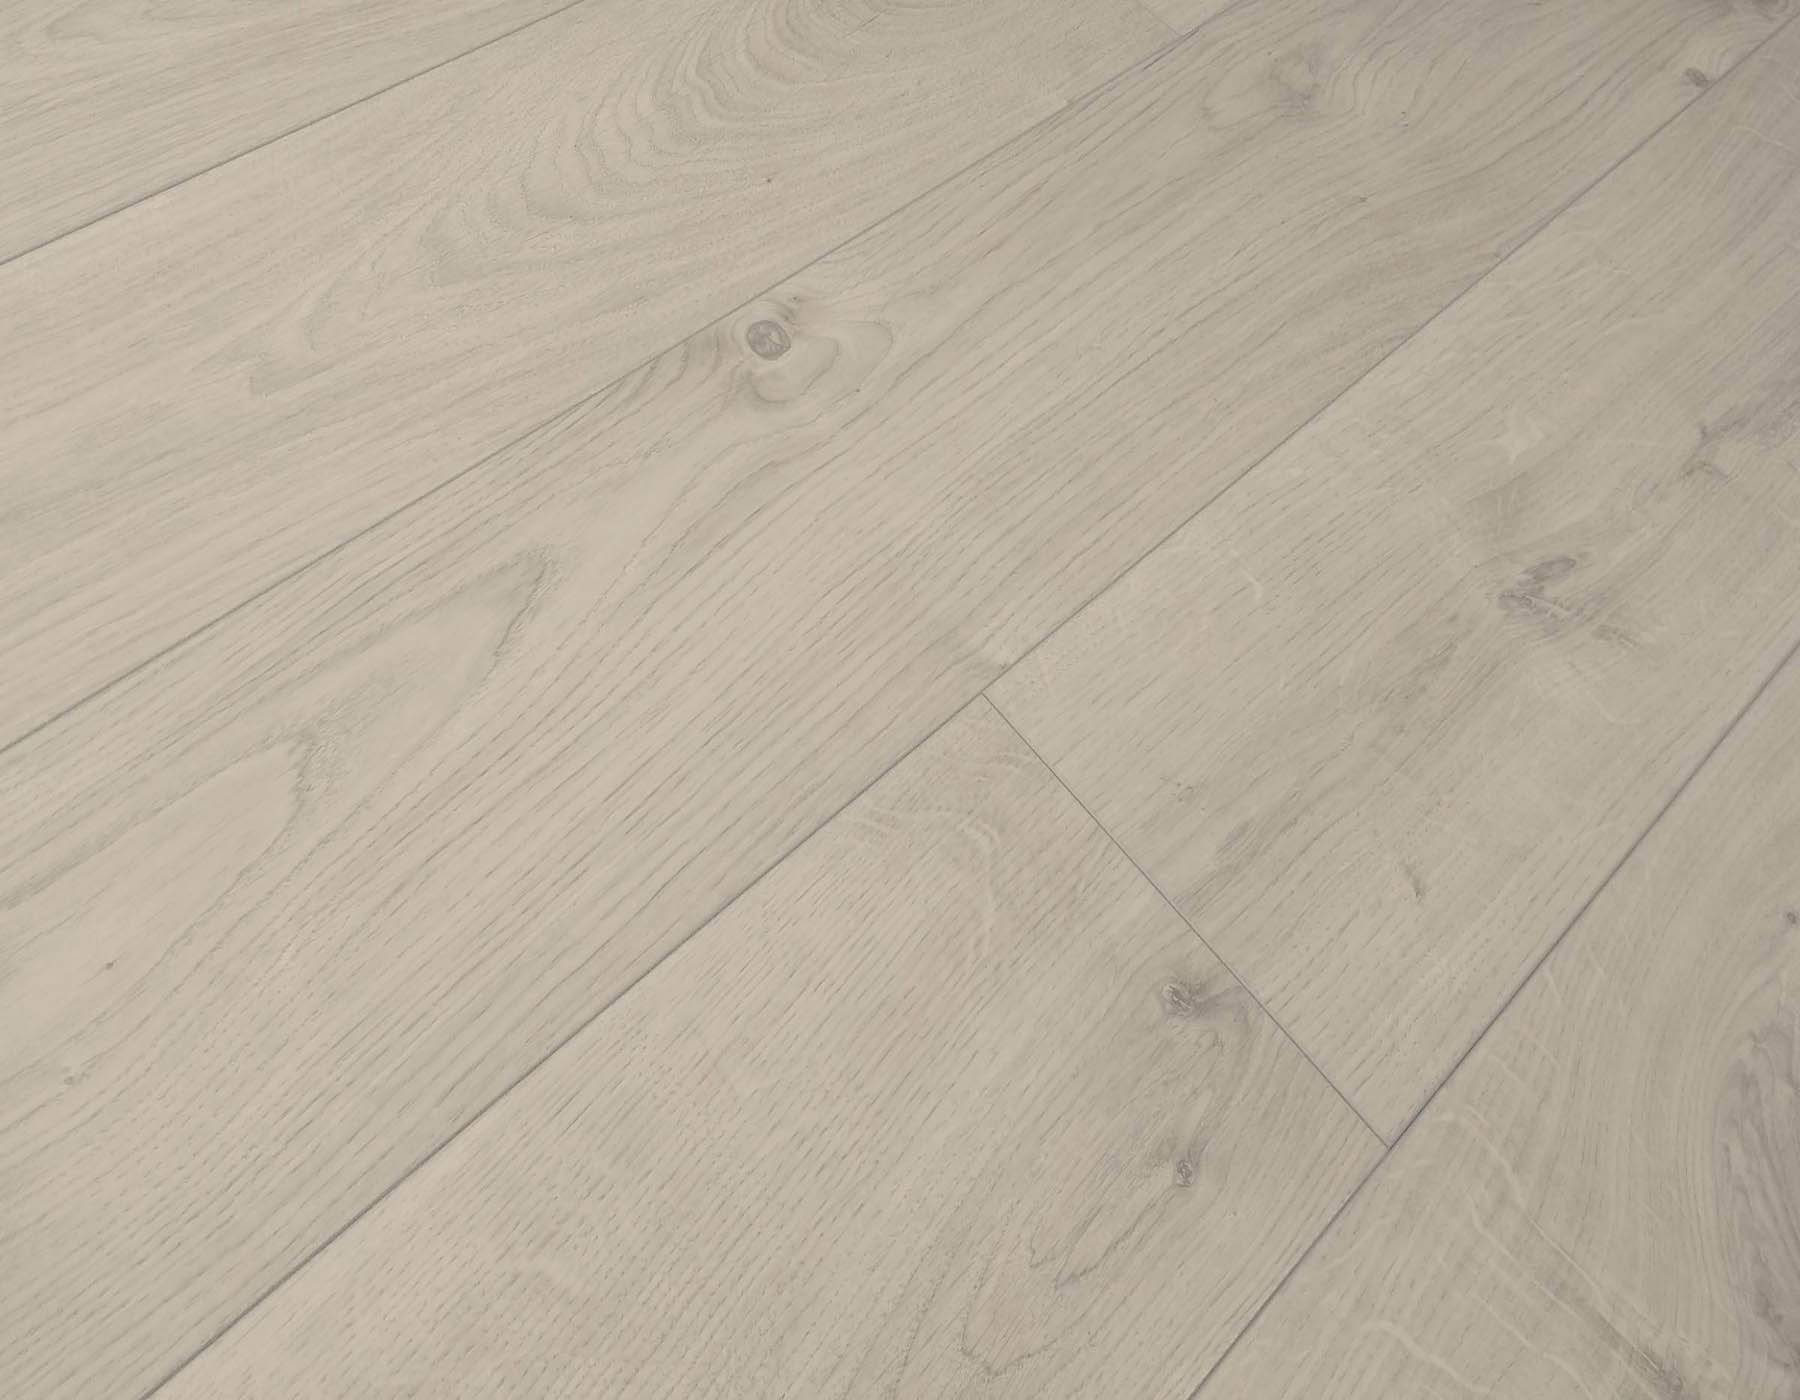 Kronotex Atlas white oak laminate flooring